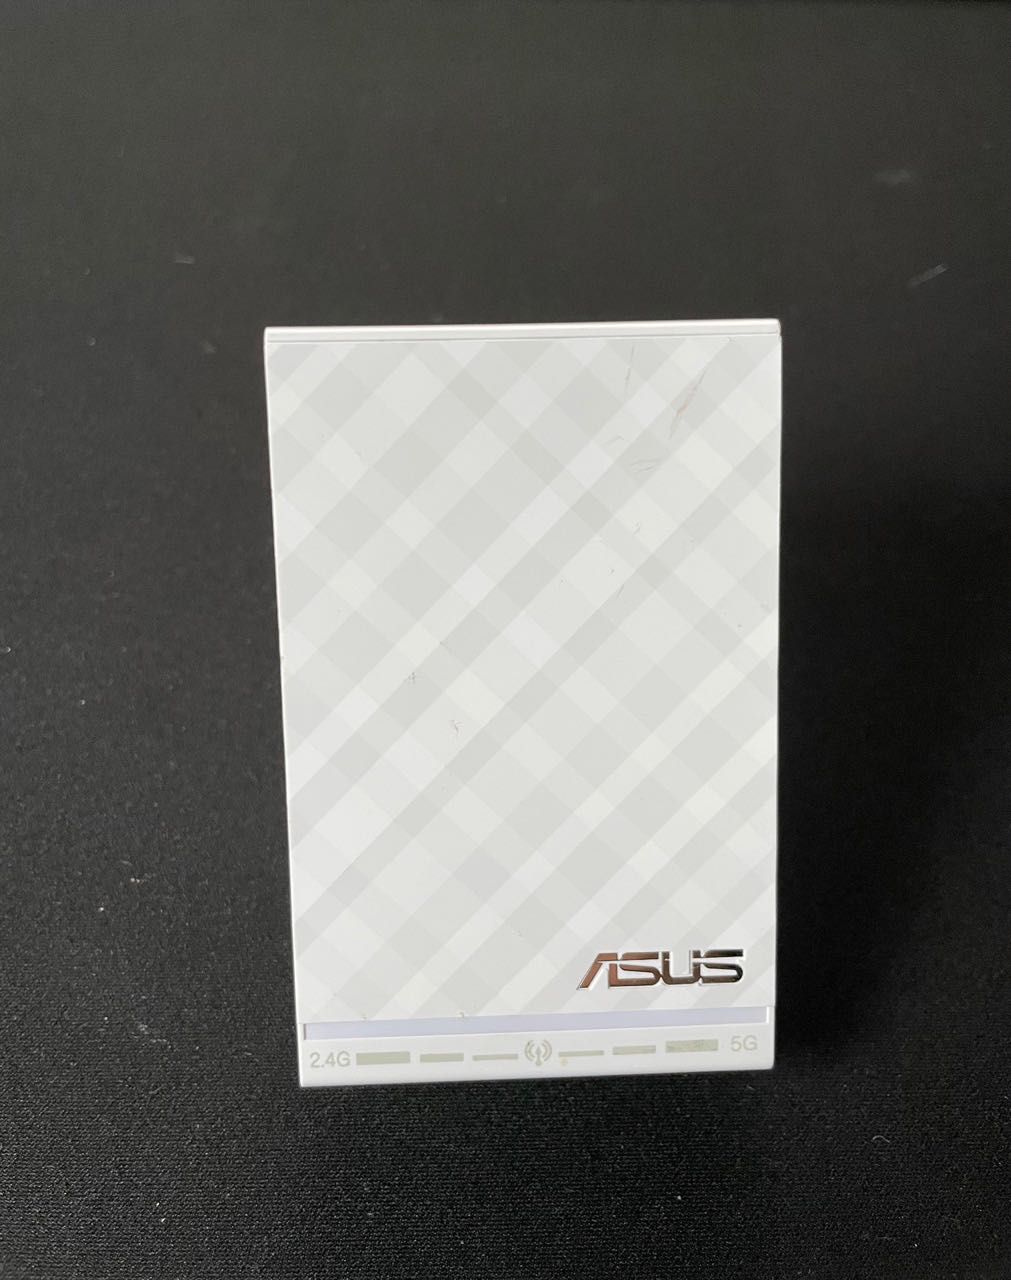 ASUS RP-N53 (802.11a/b/g/n 600Mb/s) repeater+audio